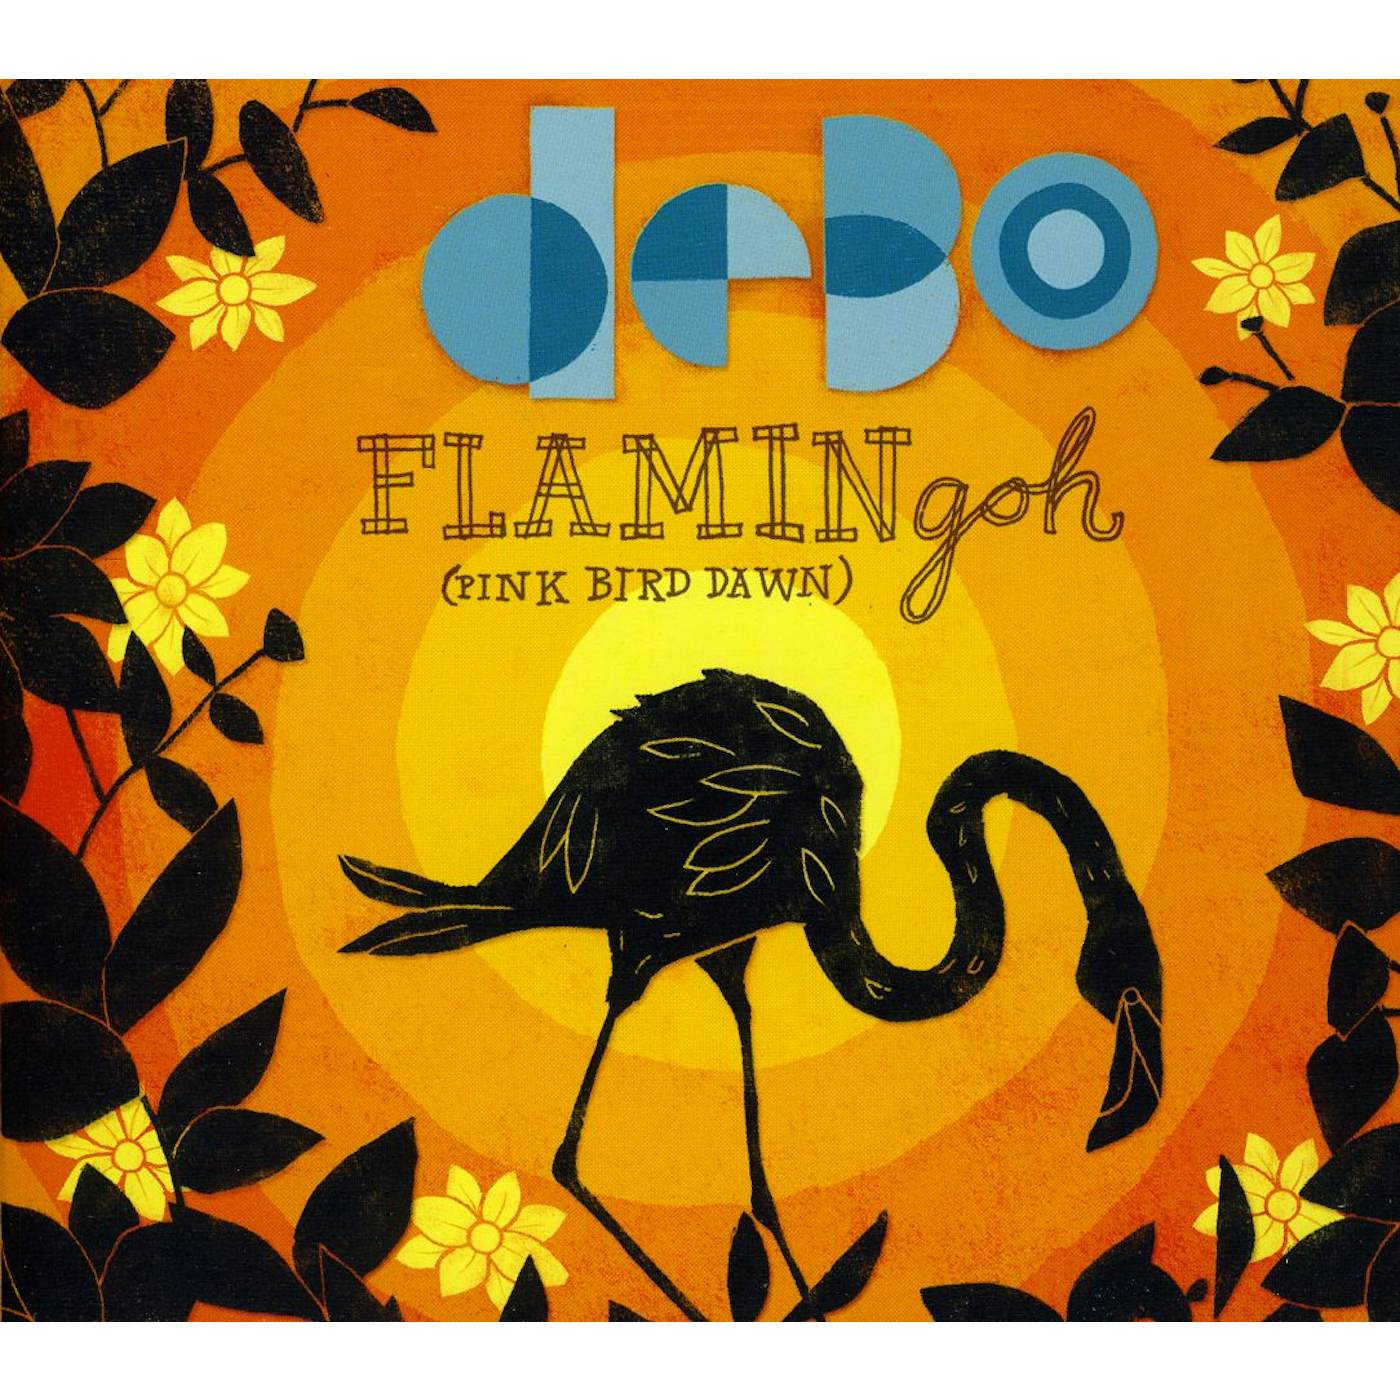 Debo Band FLAMINGOH (PINK BIRD DAWN) CD